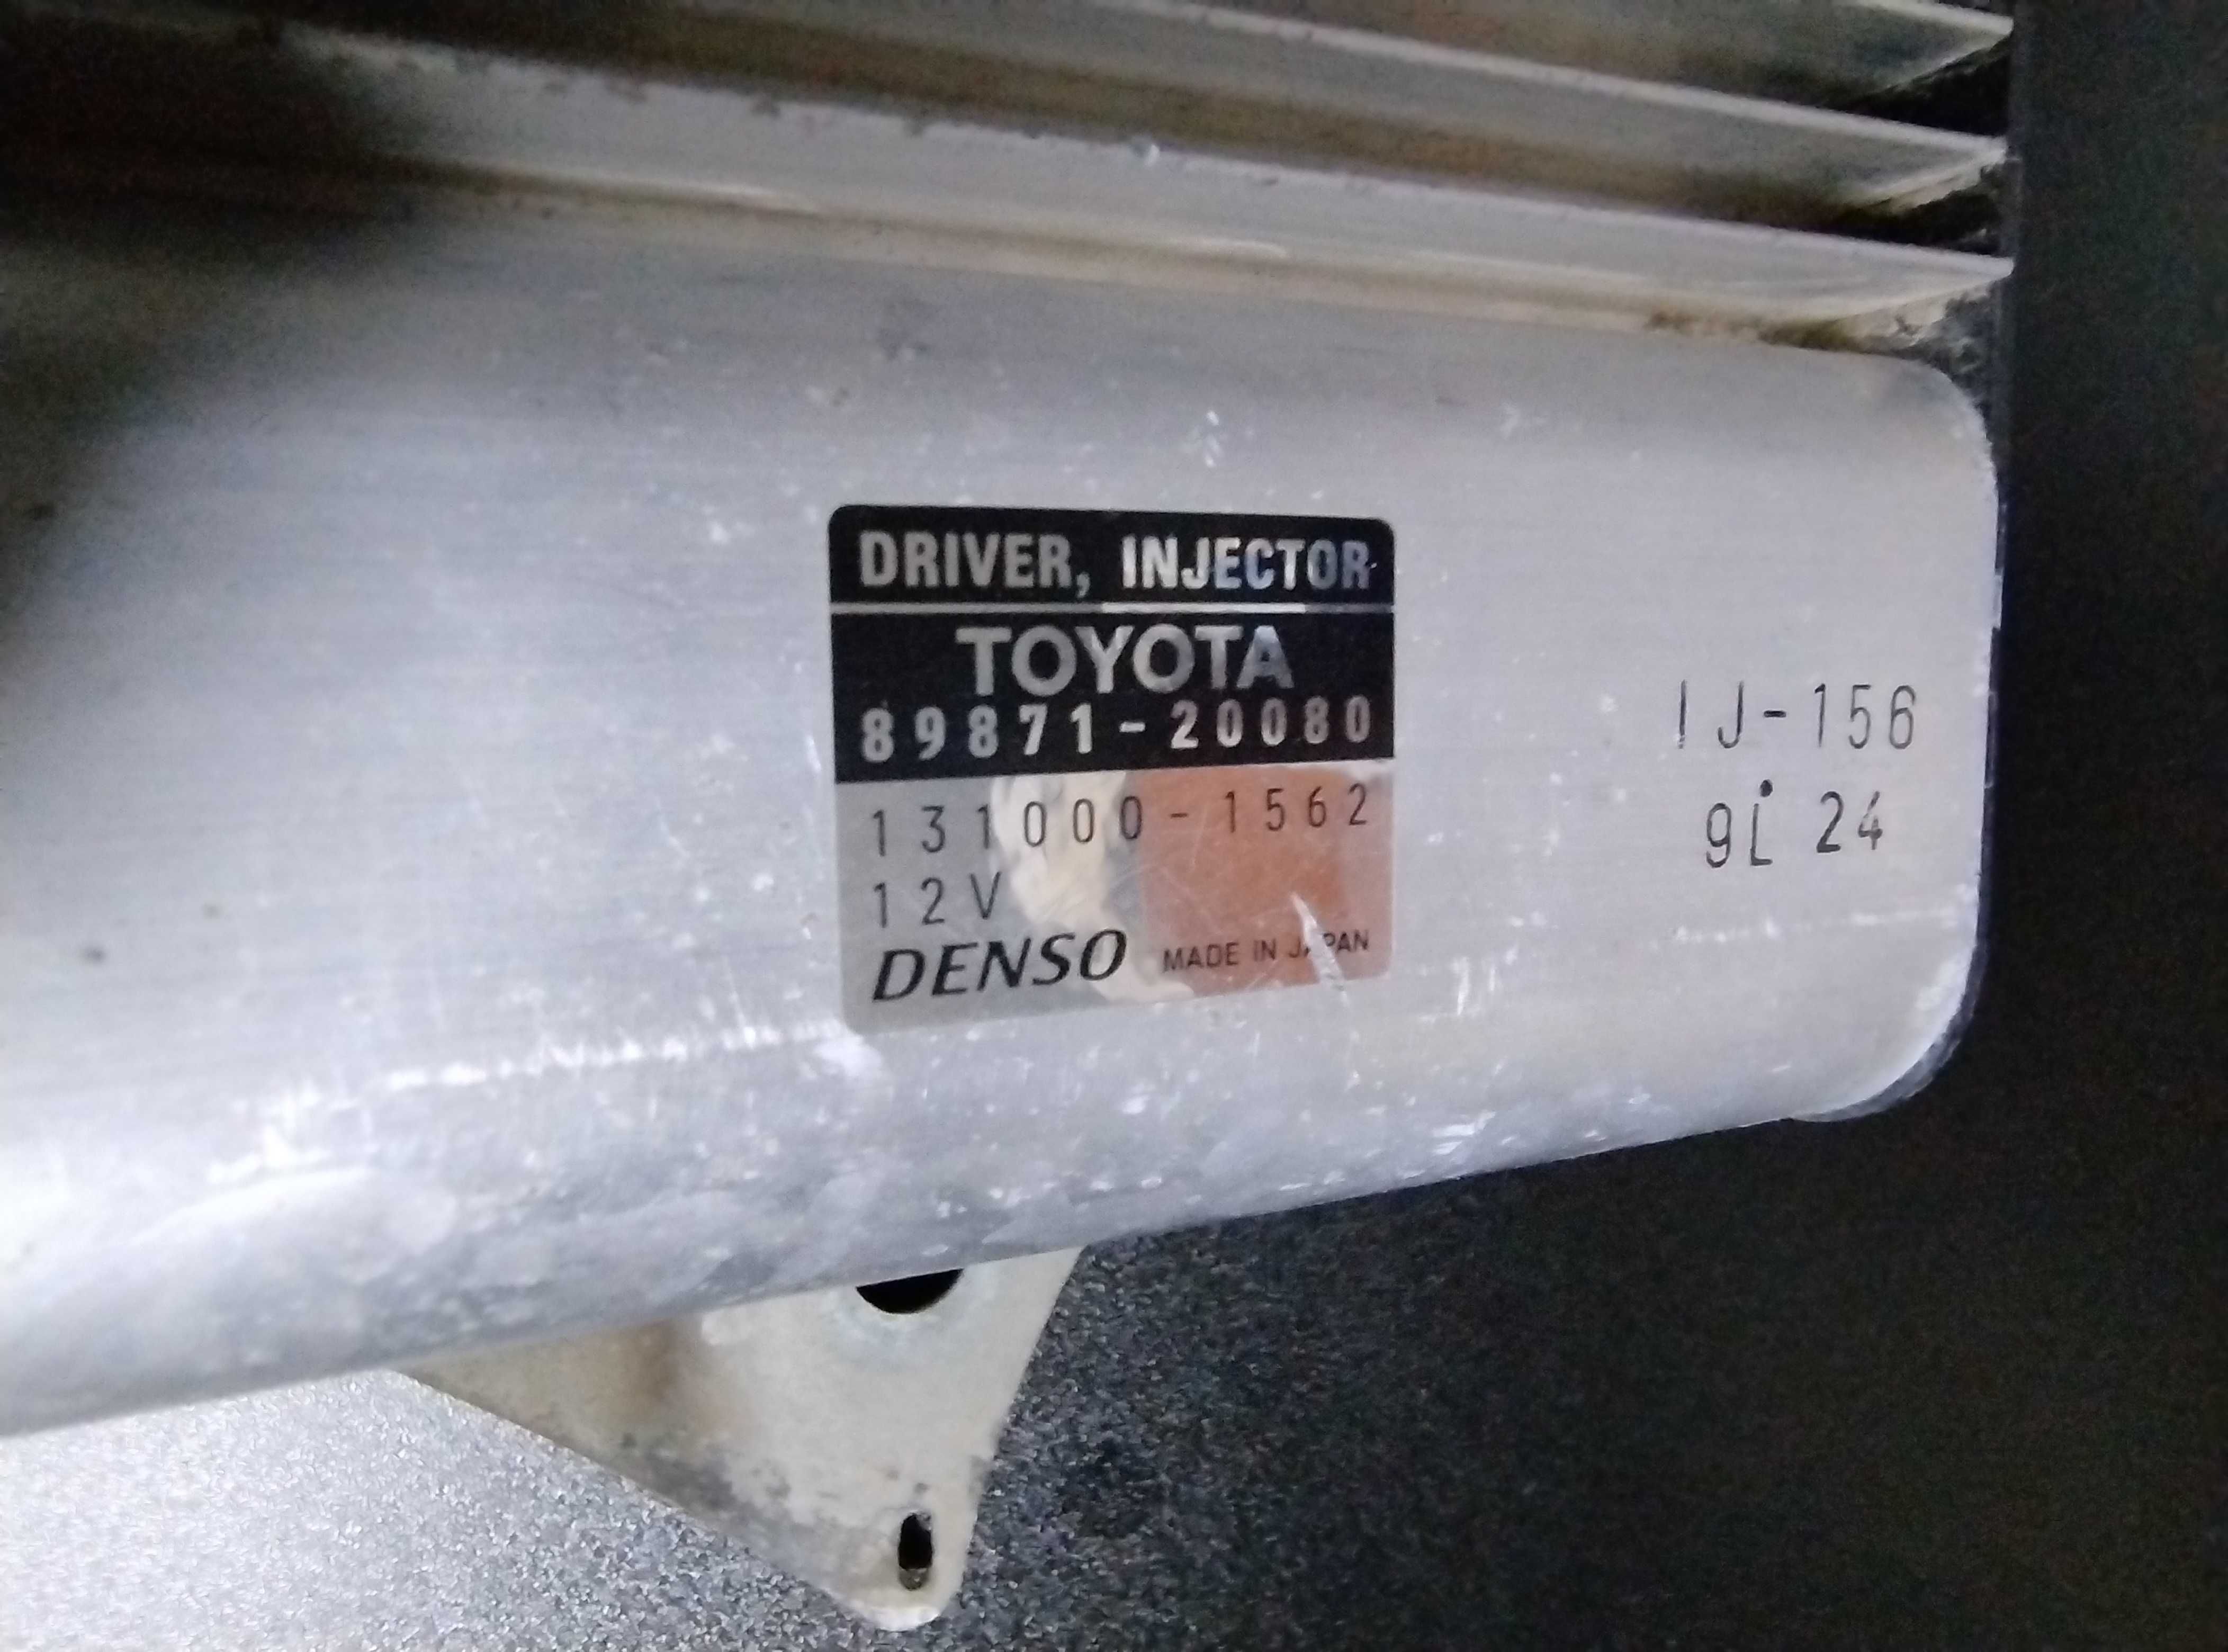 Toyota Injector Driver - Модул за управление на дюзи 89871—20080